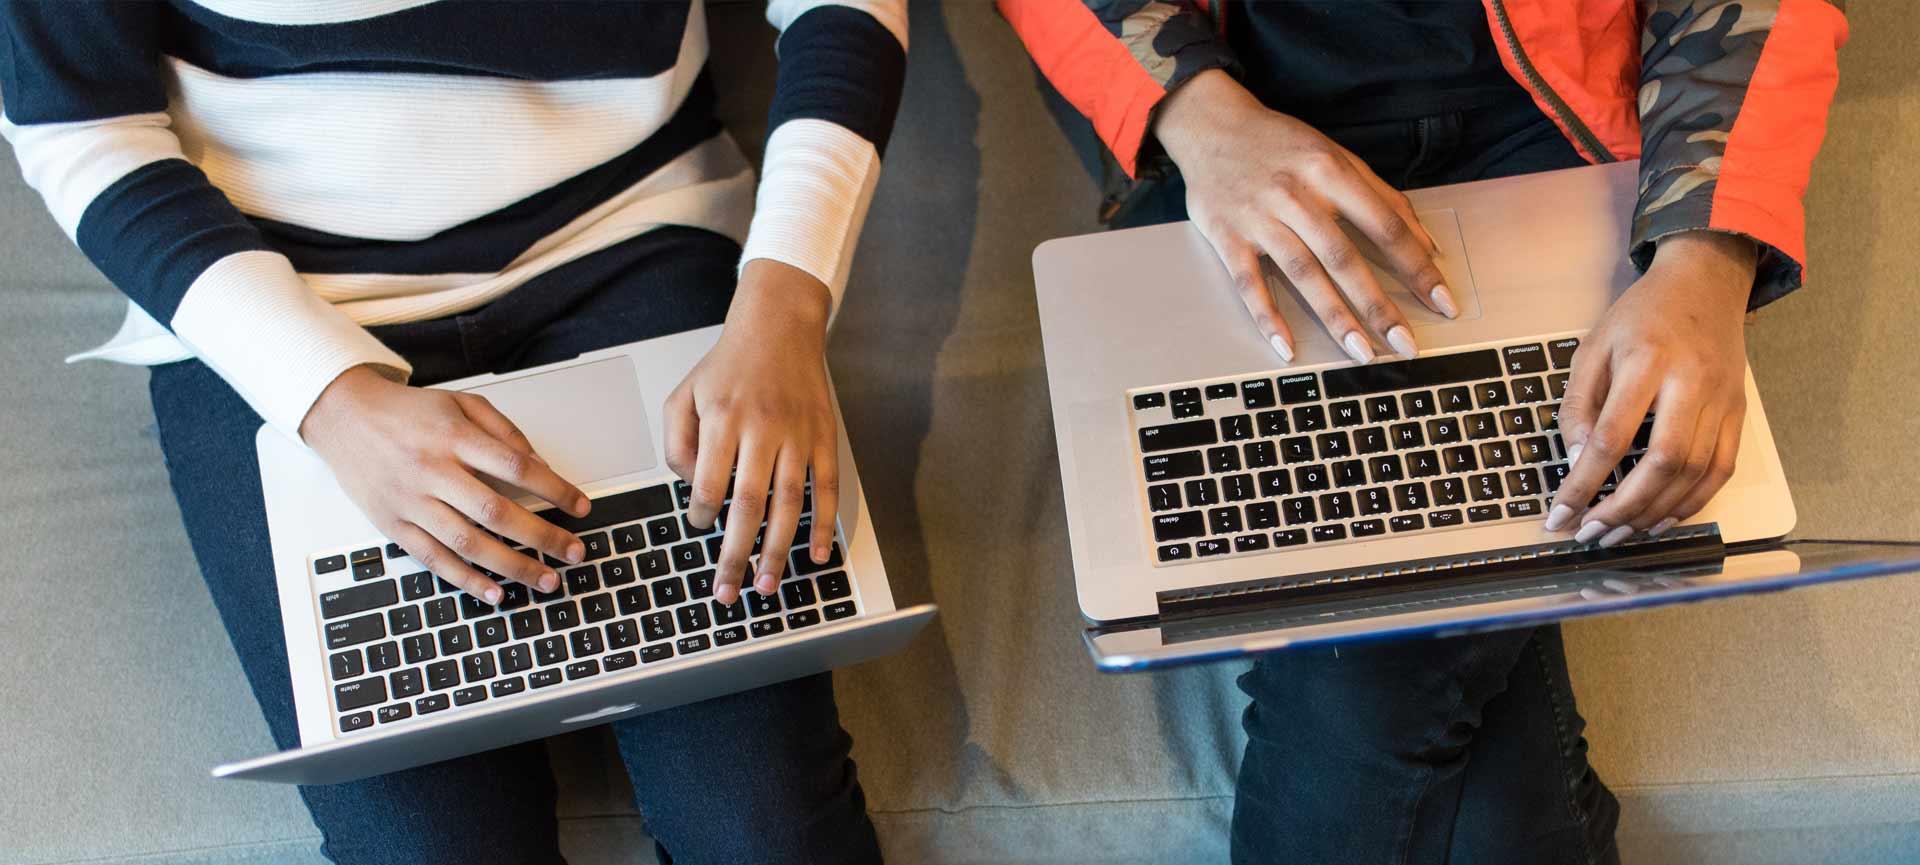 Two women using laptops